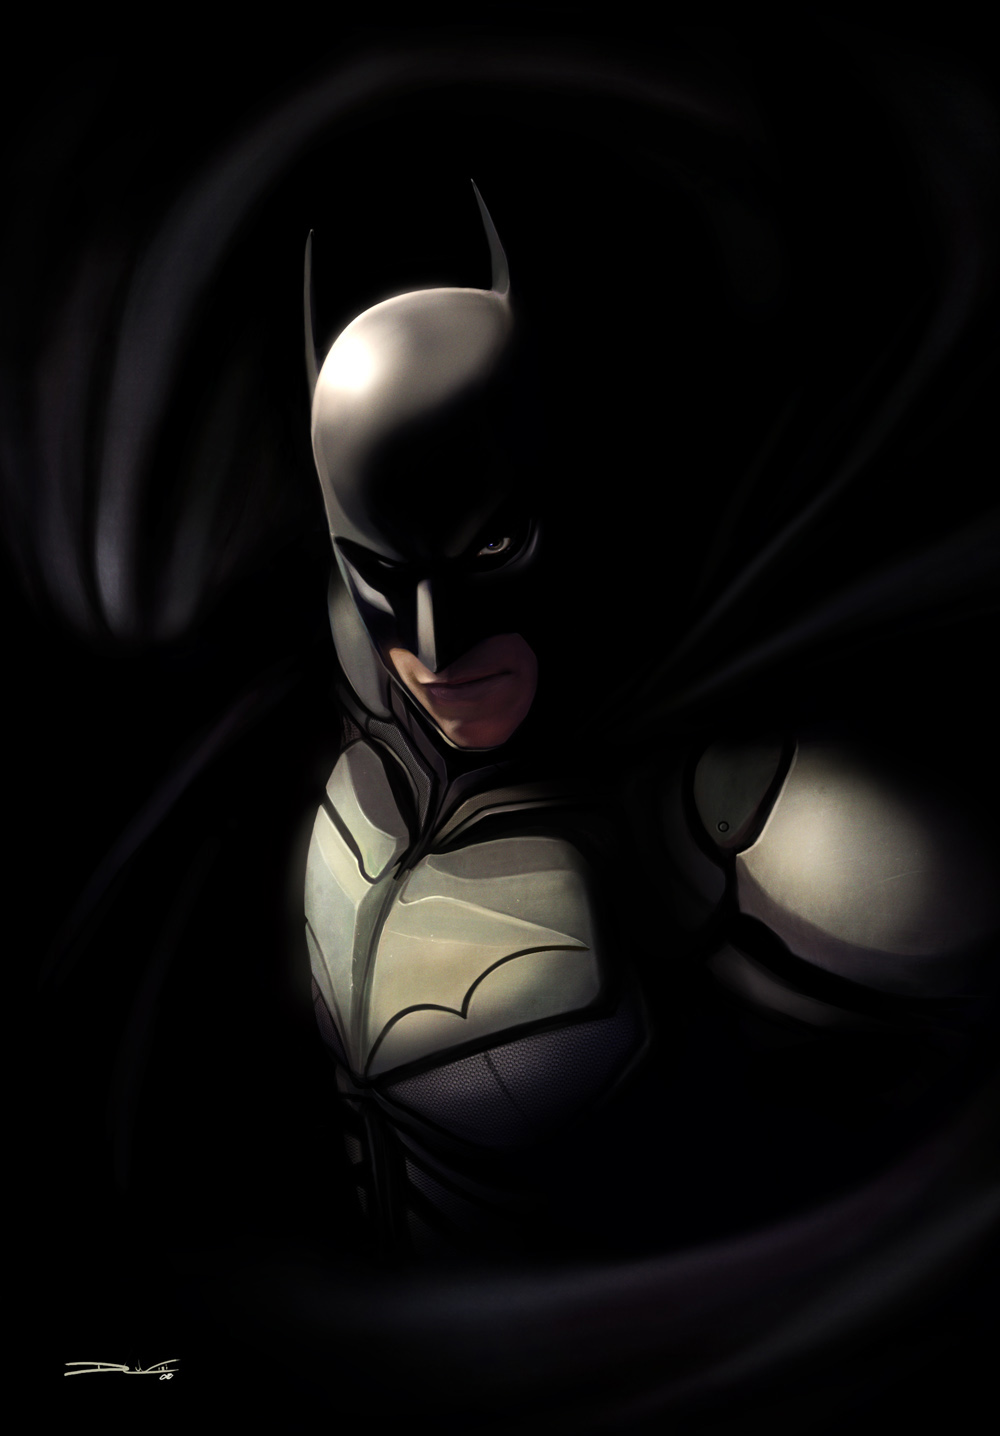 The Dark Knight - by DanLuVisiArt on DeviantArt